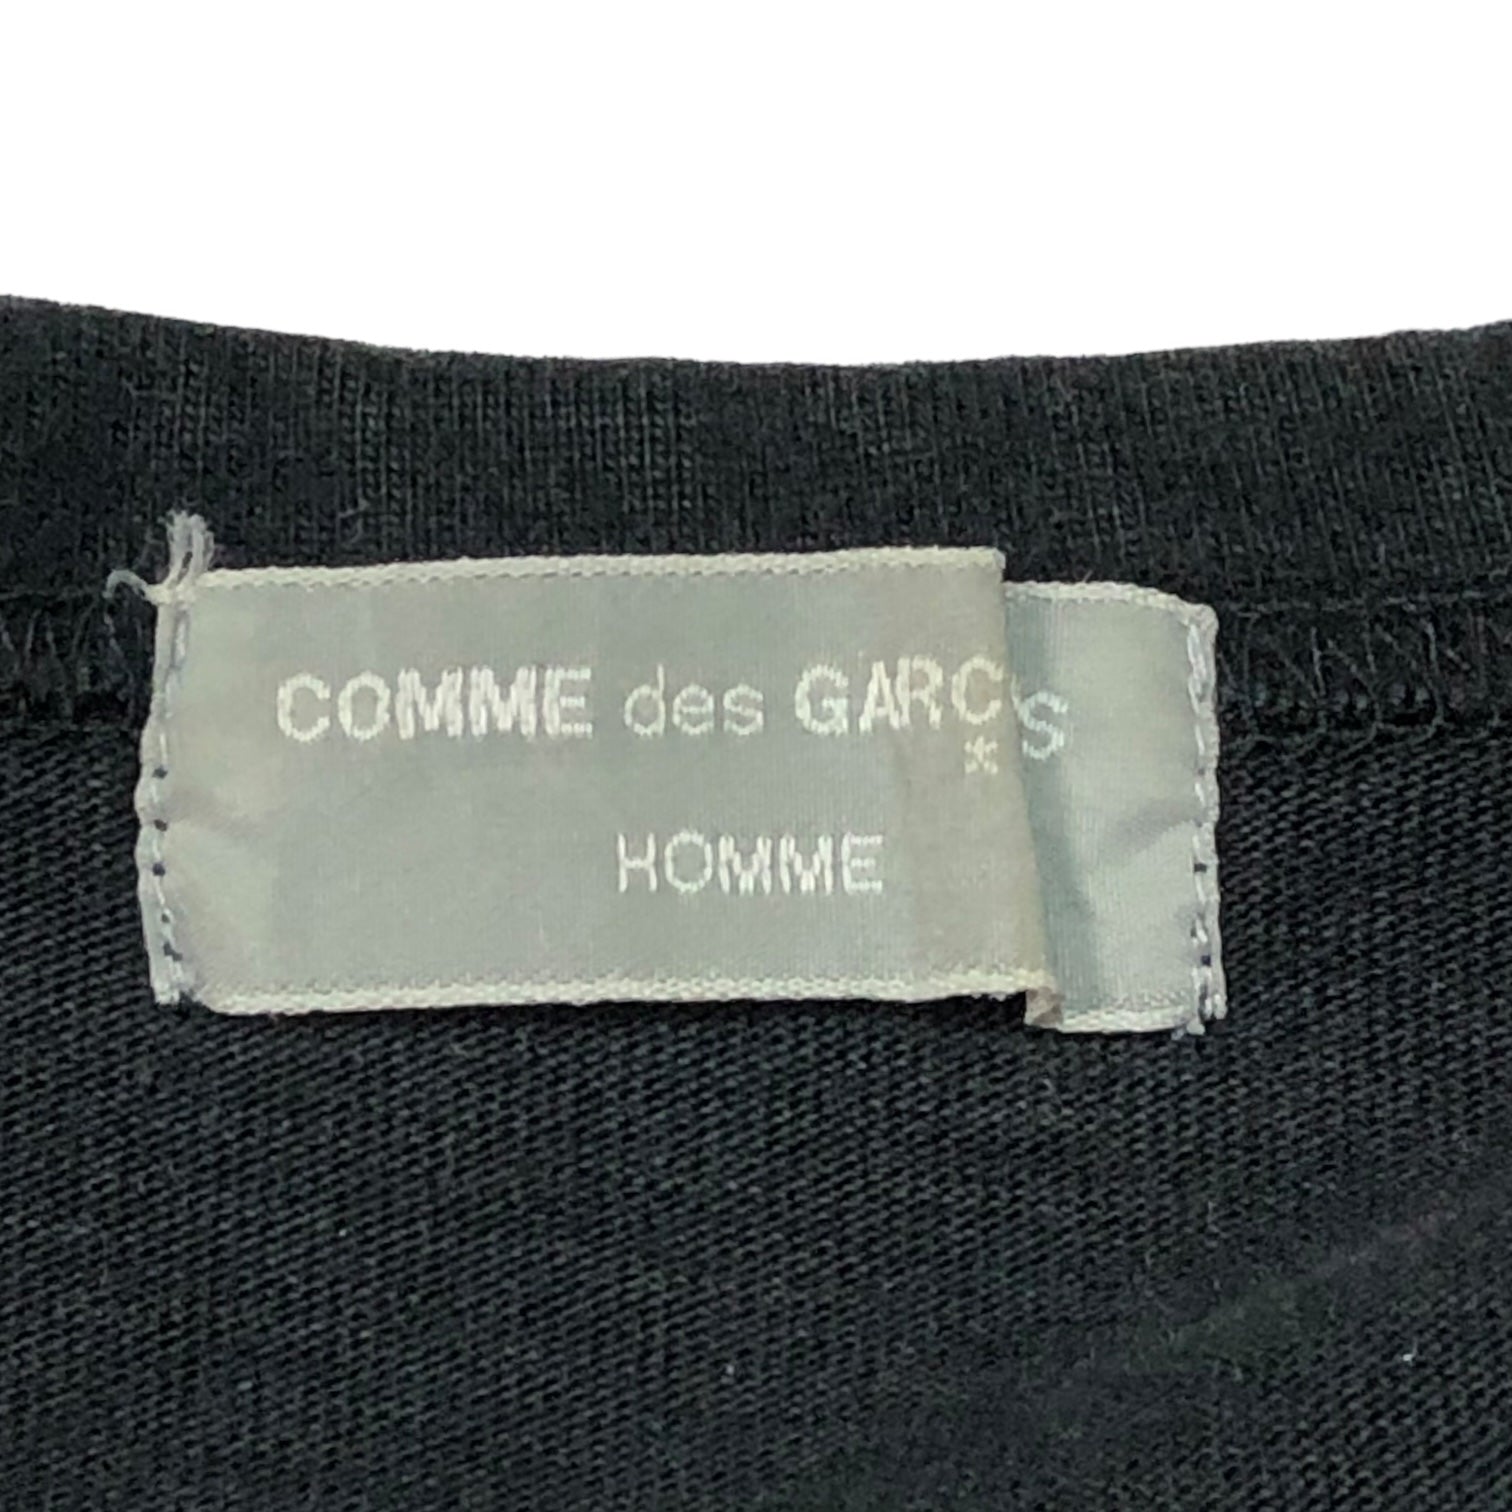 COMME des GARCONS HOMME(コムデギャルソンオム) 90's shirt sleeve tee シャツスリーブ カットソー 田中オム 型番消え FREE(表記消え) ブラック 稀少品